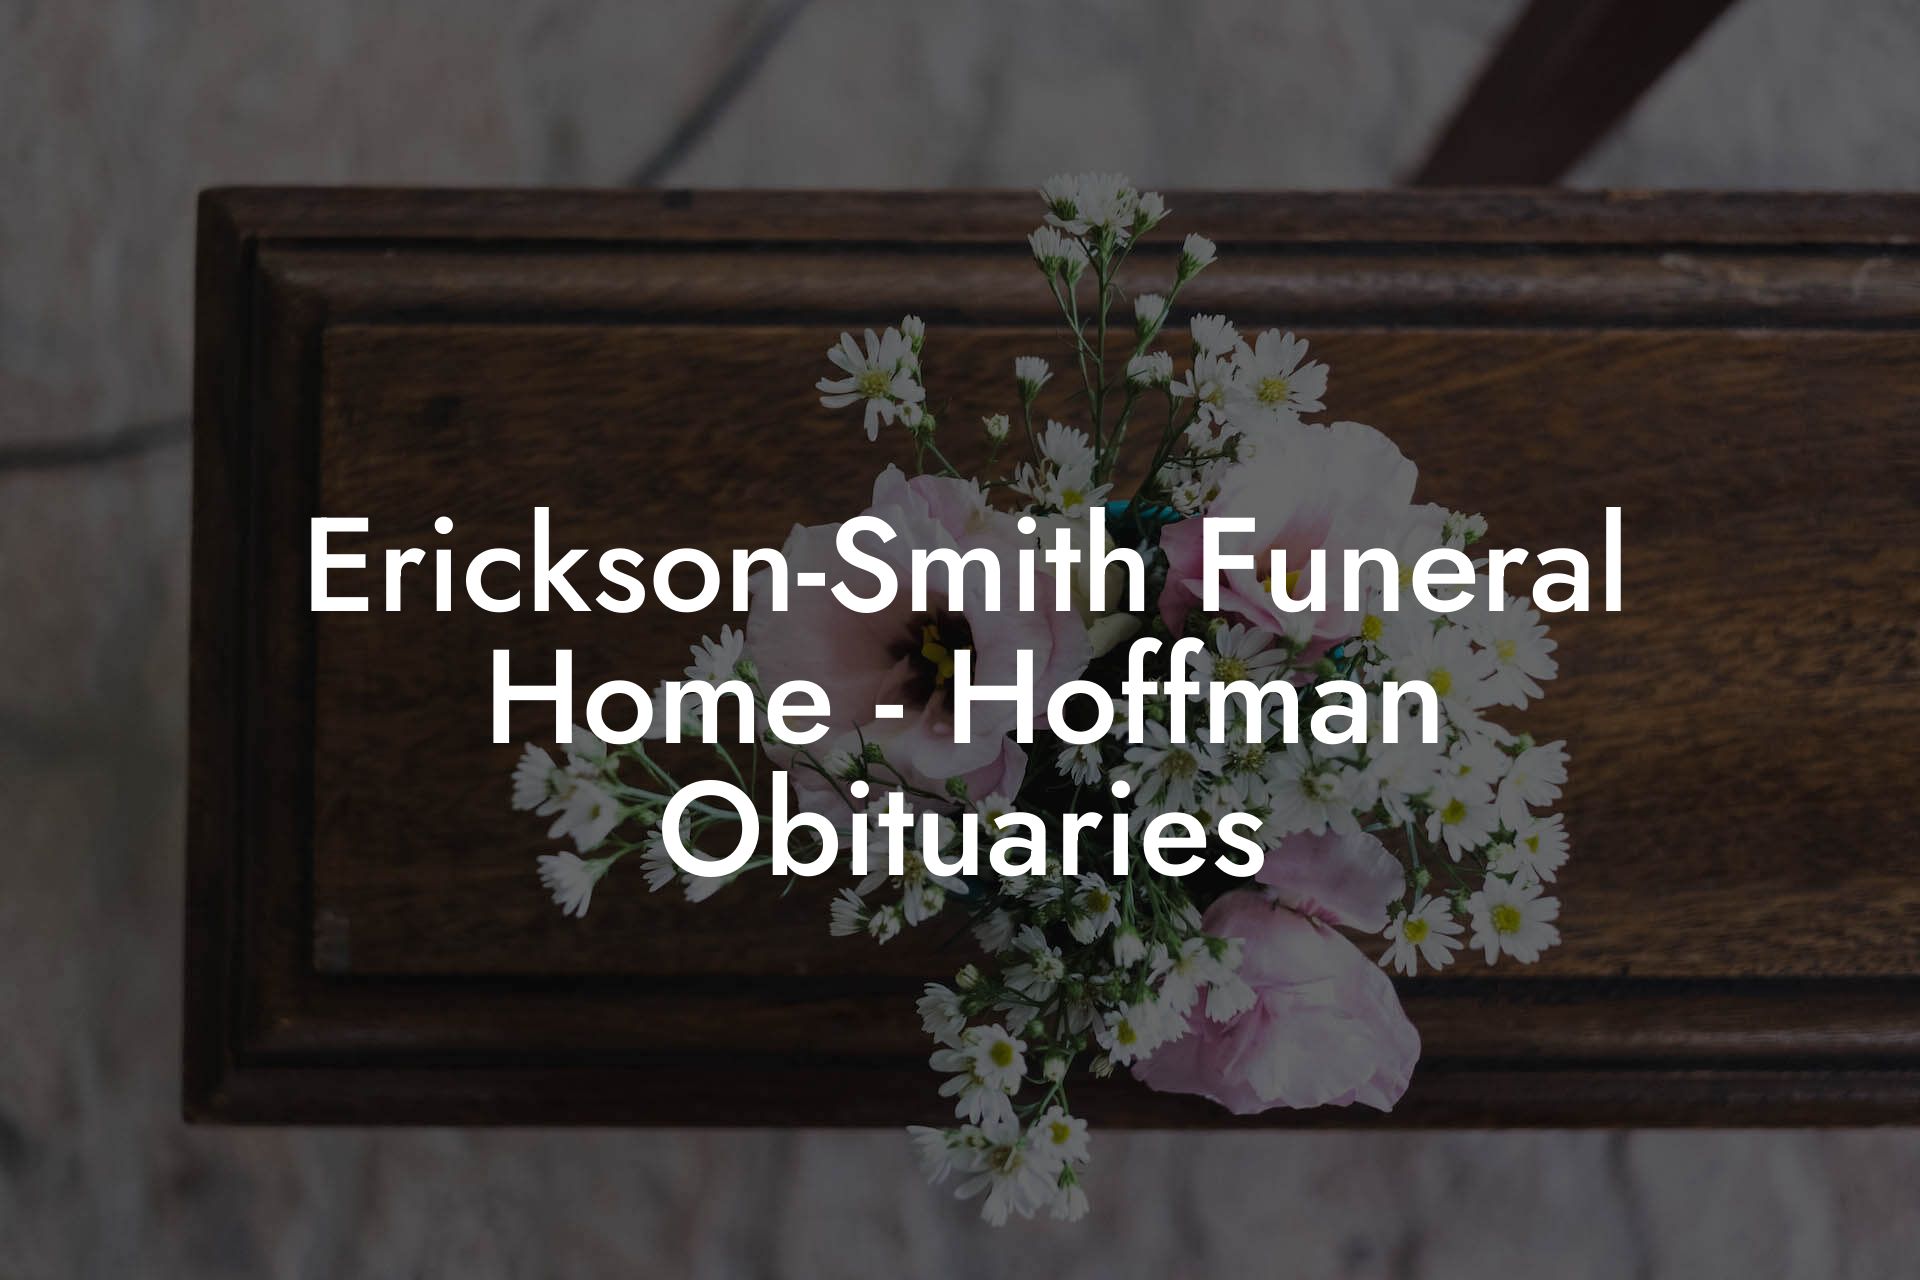 Erickson-Smith Funeral Home - Hoffman Obituaries